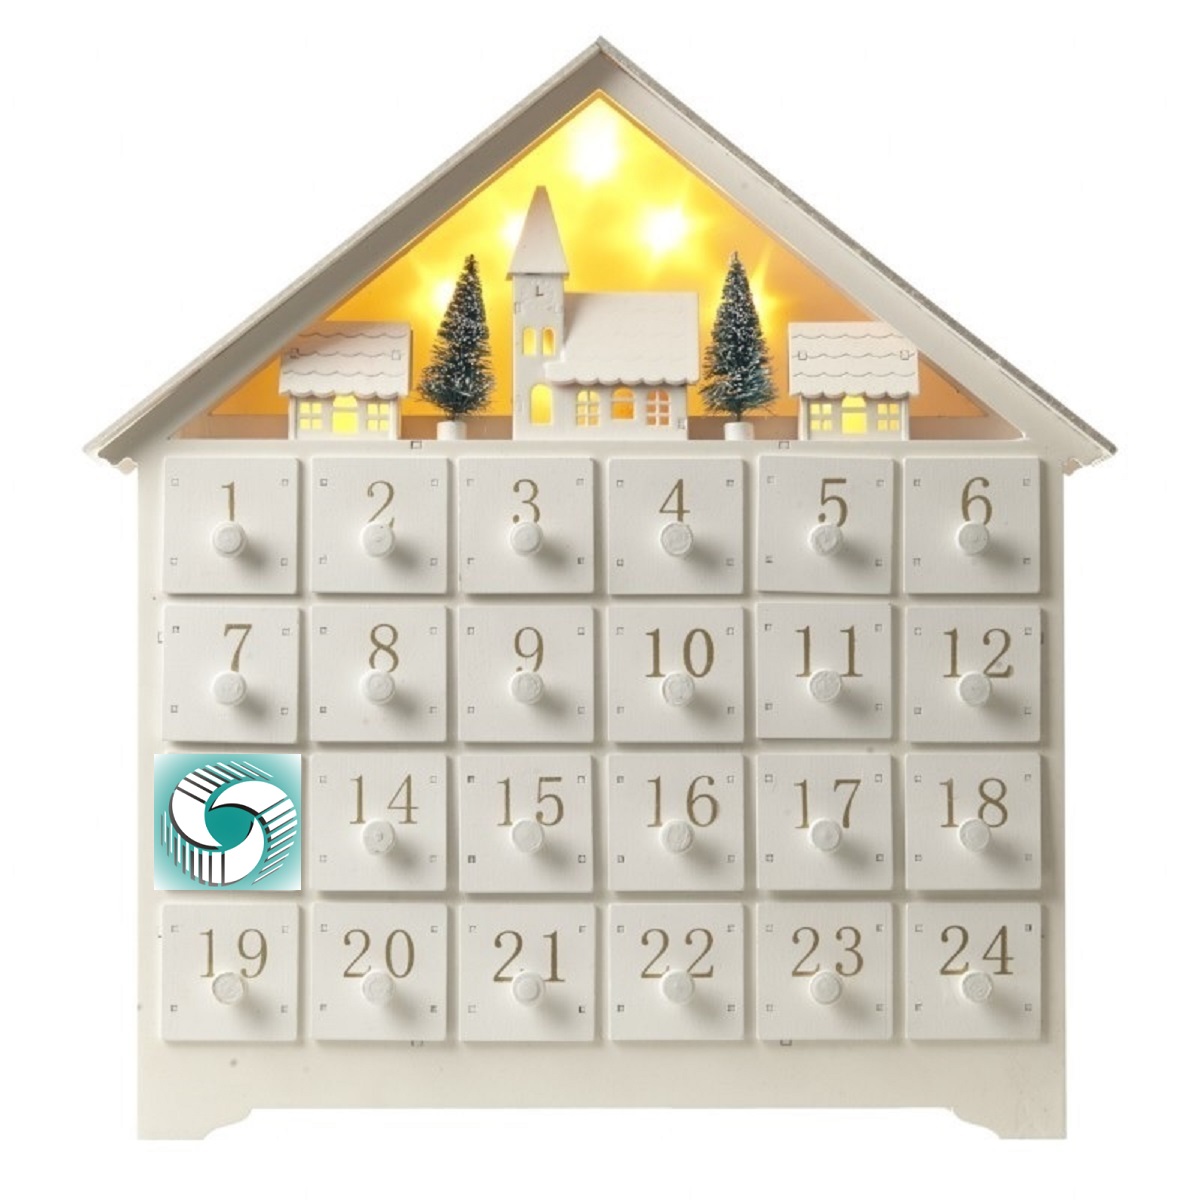 Day 13 – Frontier’s Advent Calendar